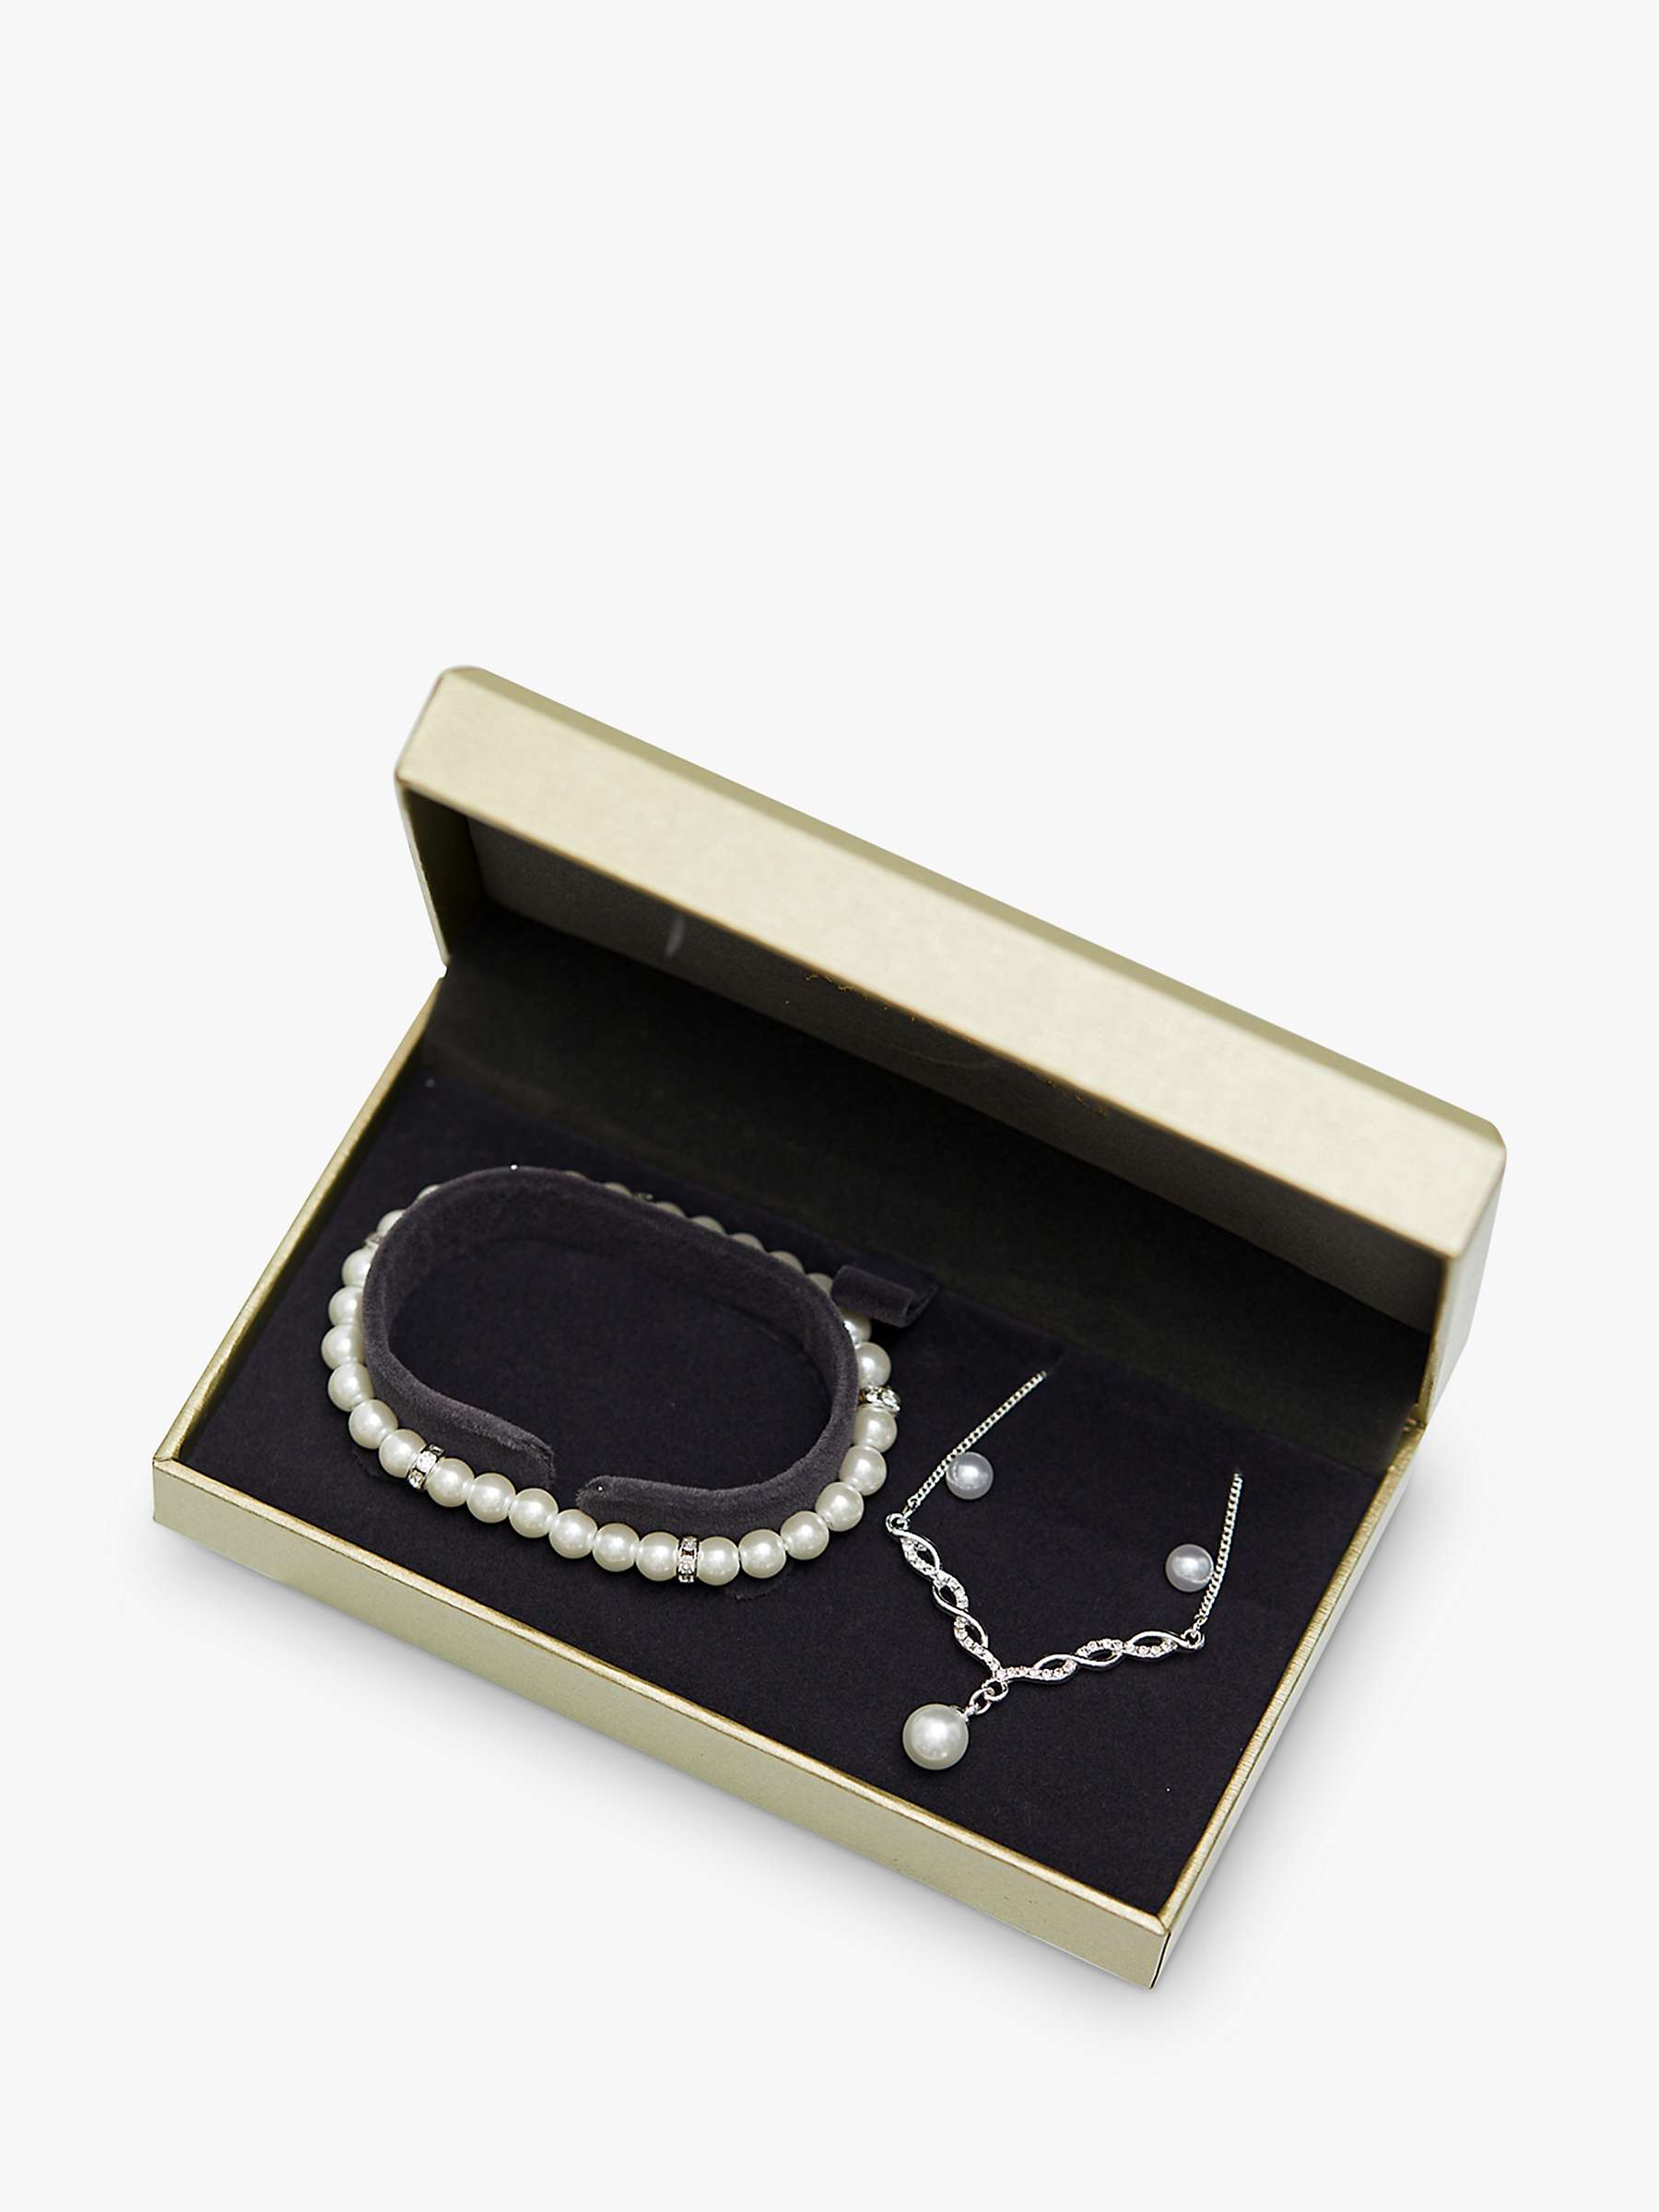 Buy Jon Richard Glass & Pearls Twist Pendant Necklace, Bracelet and Drop Earrings Jewellery Gift Set, Silver Online at johnlewis.com